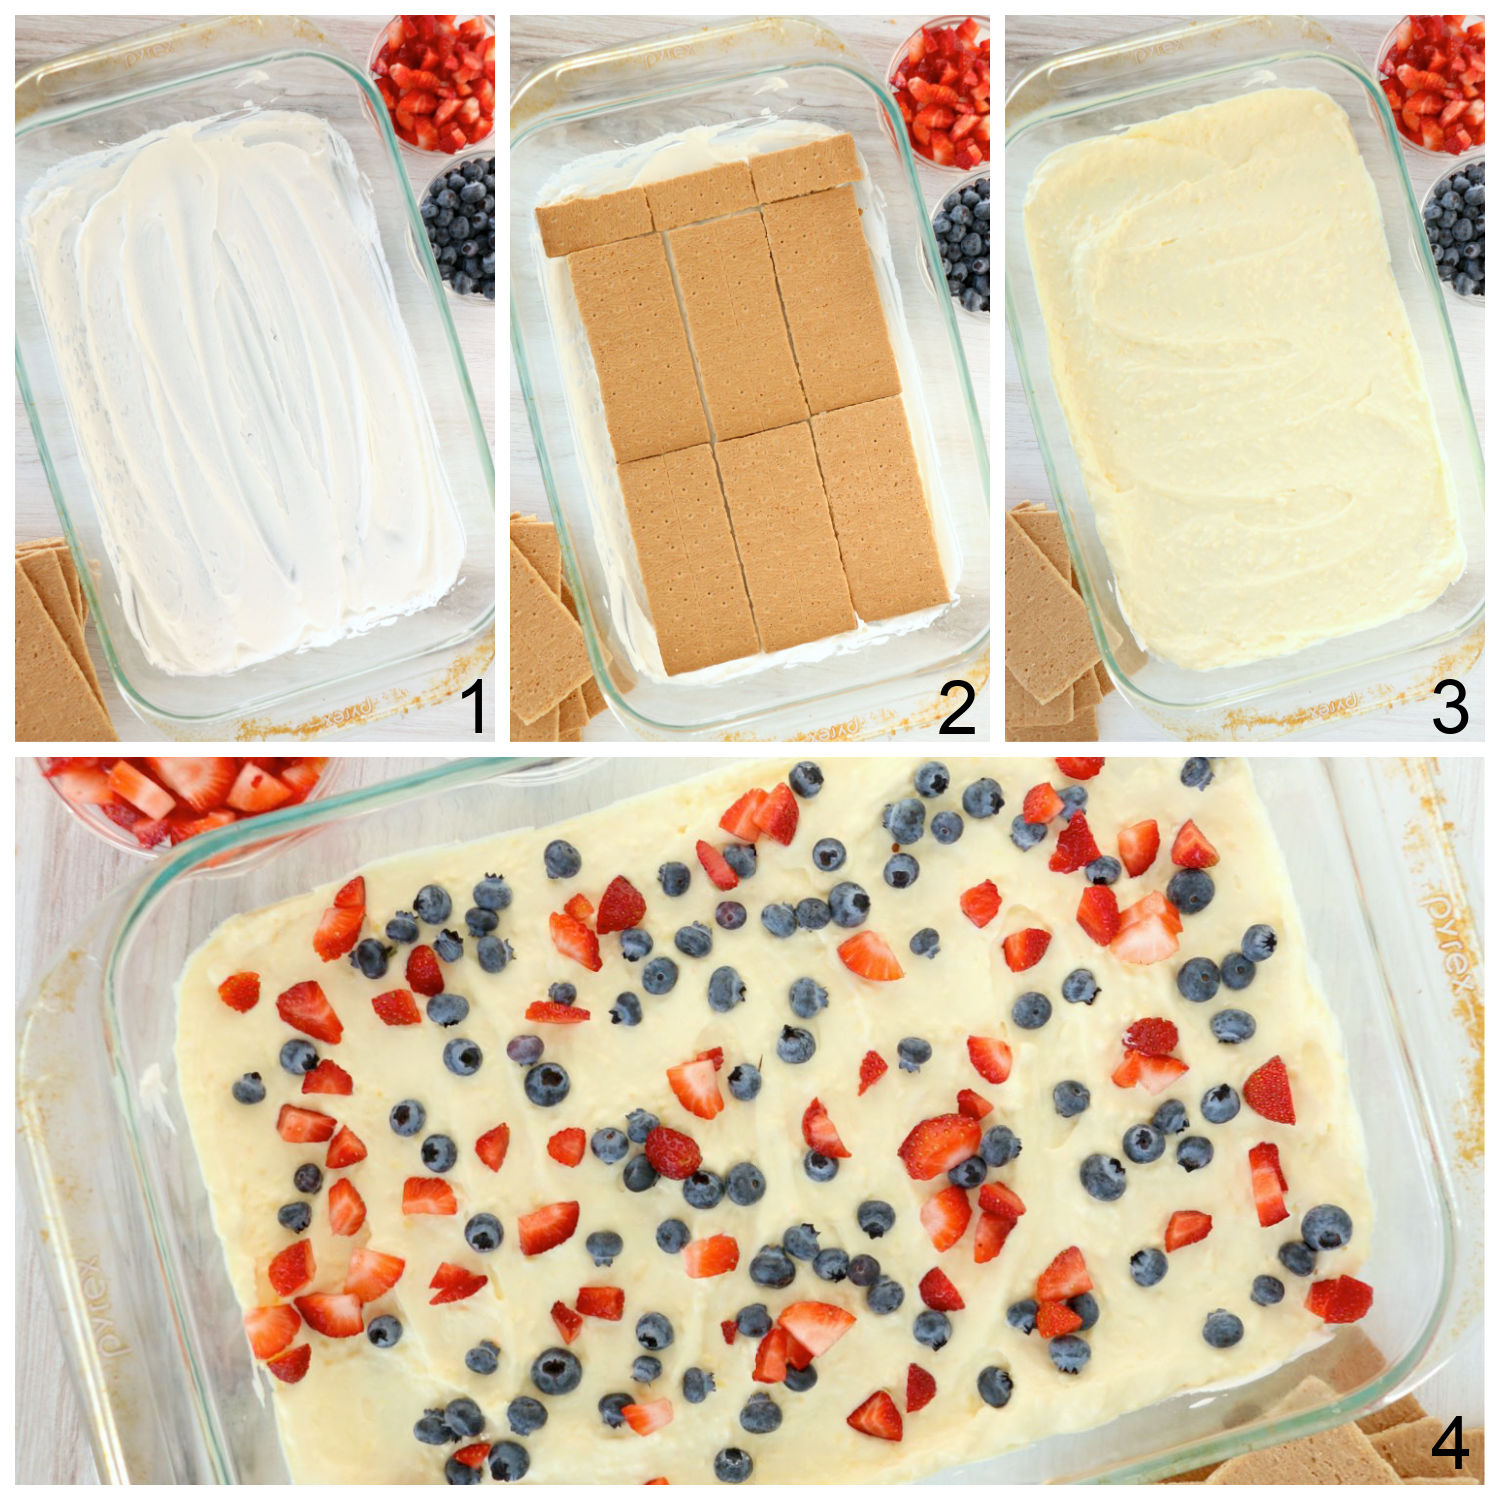 Creating layers of icebox cake